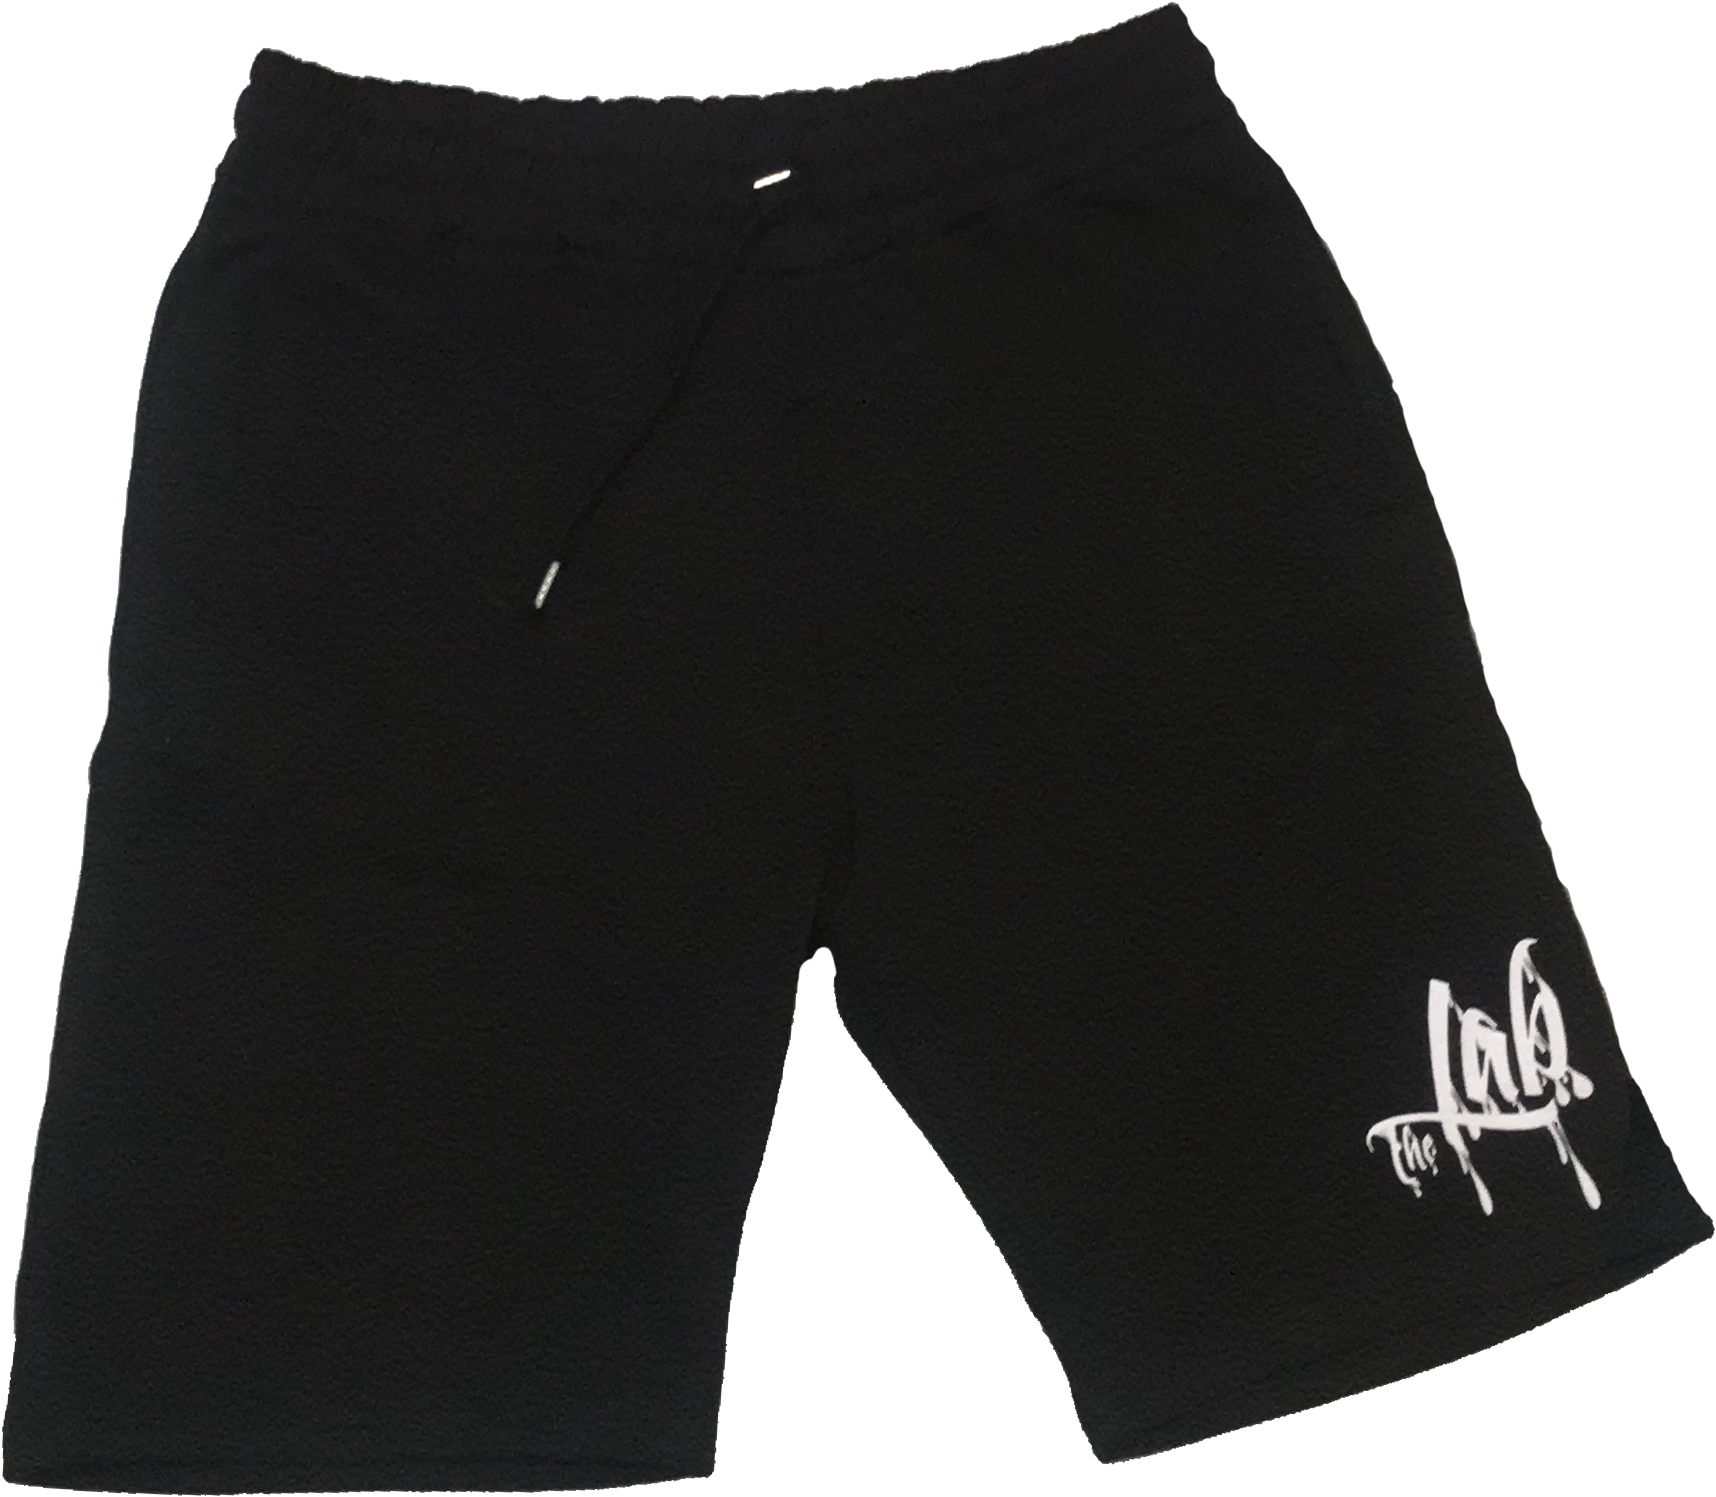 bermuda shorts black transparent download #42491